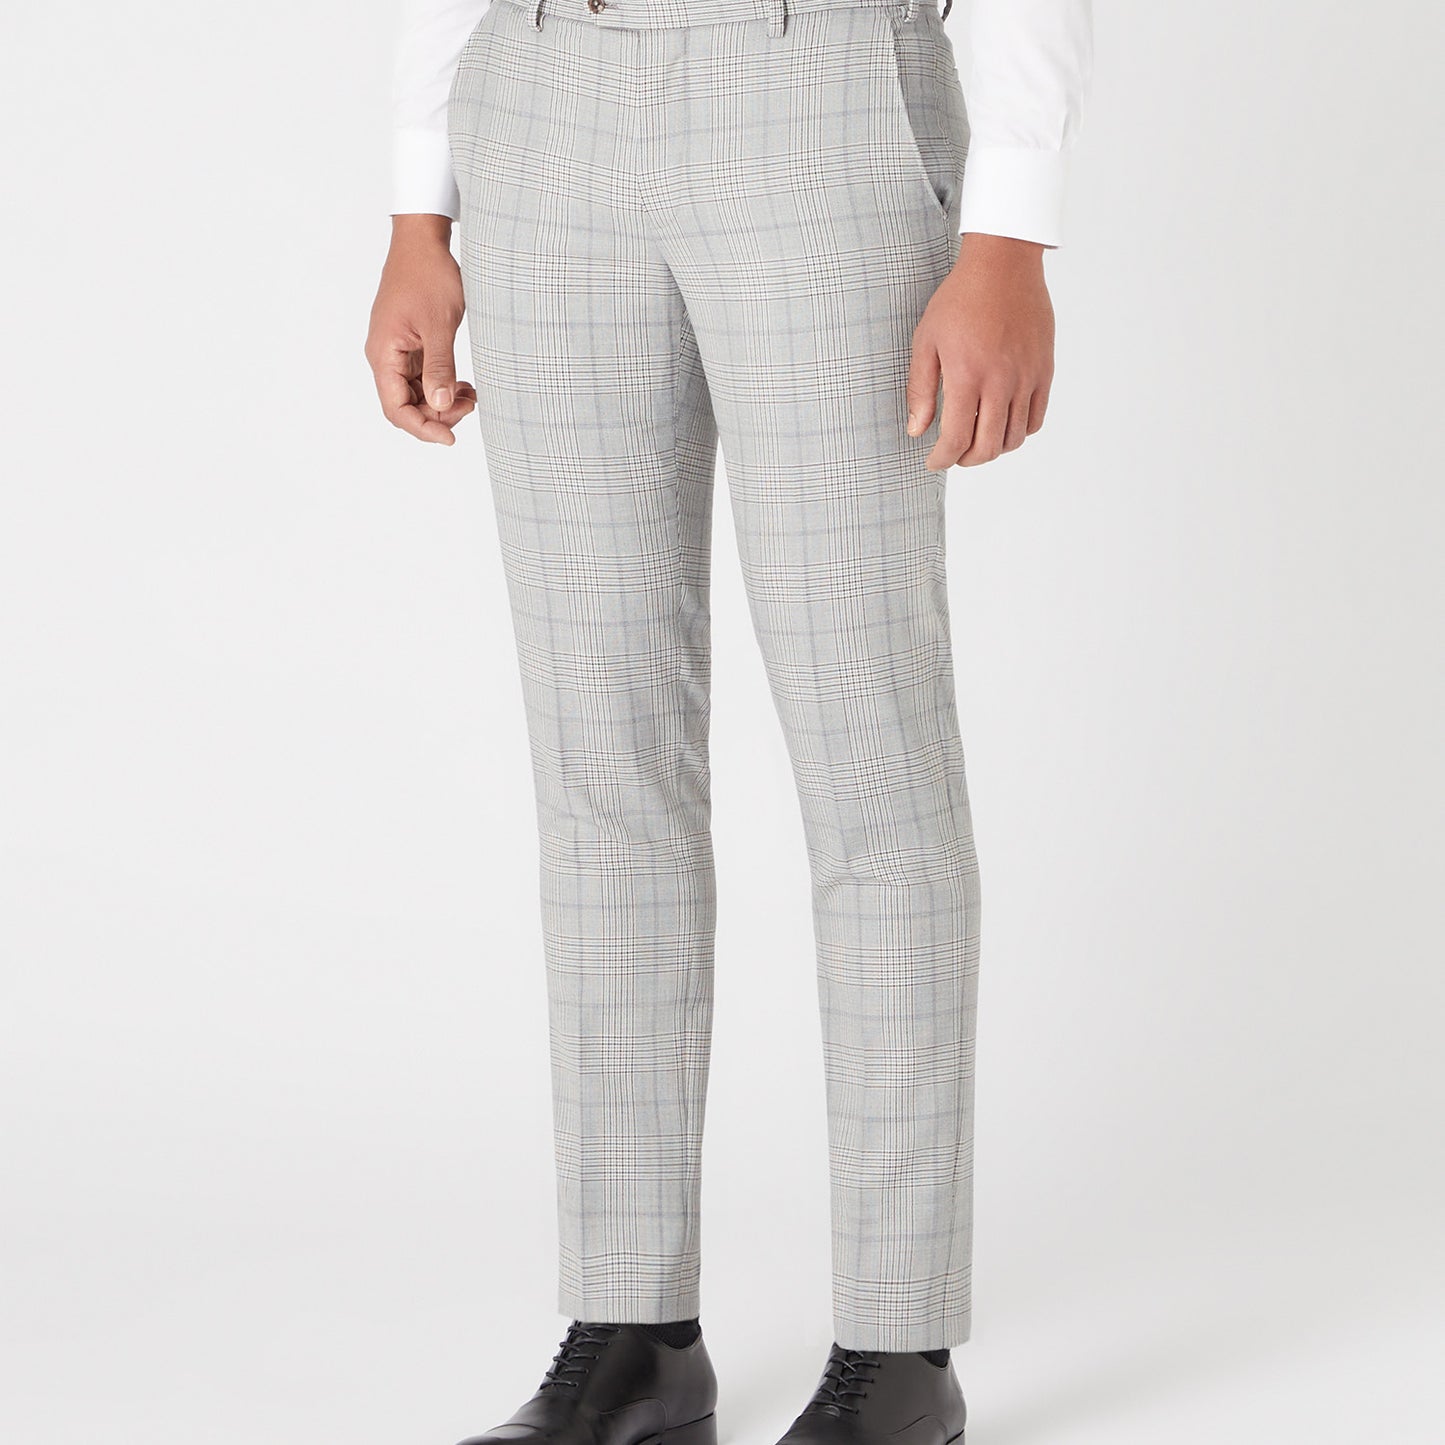 Remus Uomo 72035 04 Grey Tapered Suit Trouser